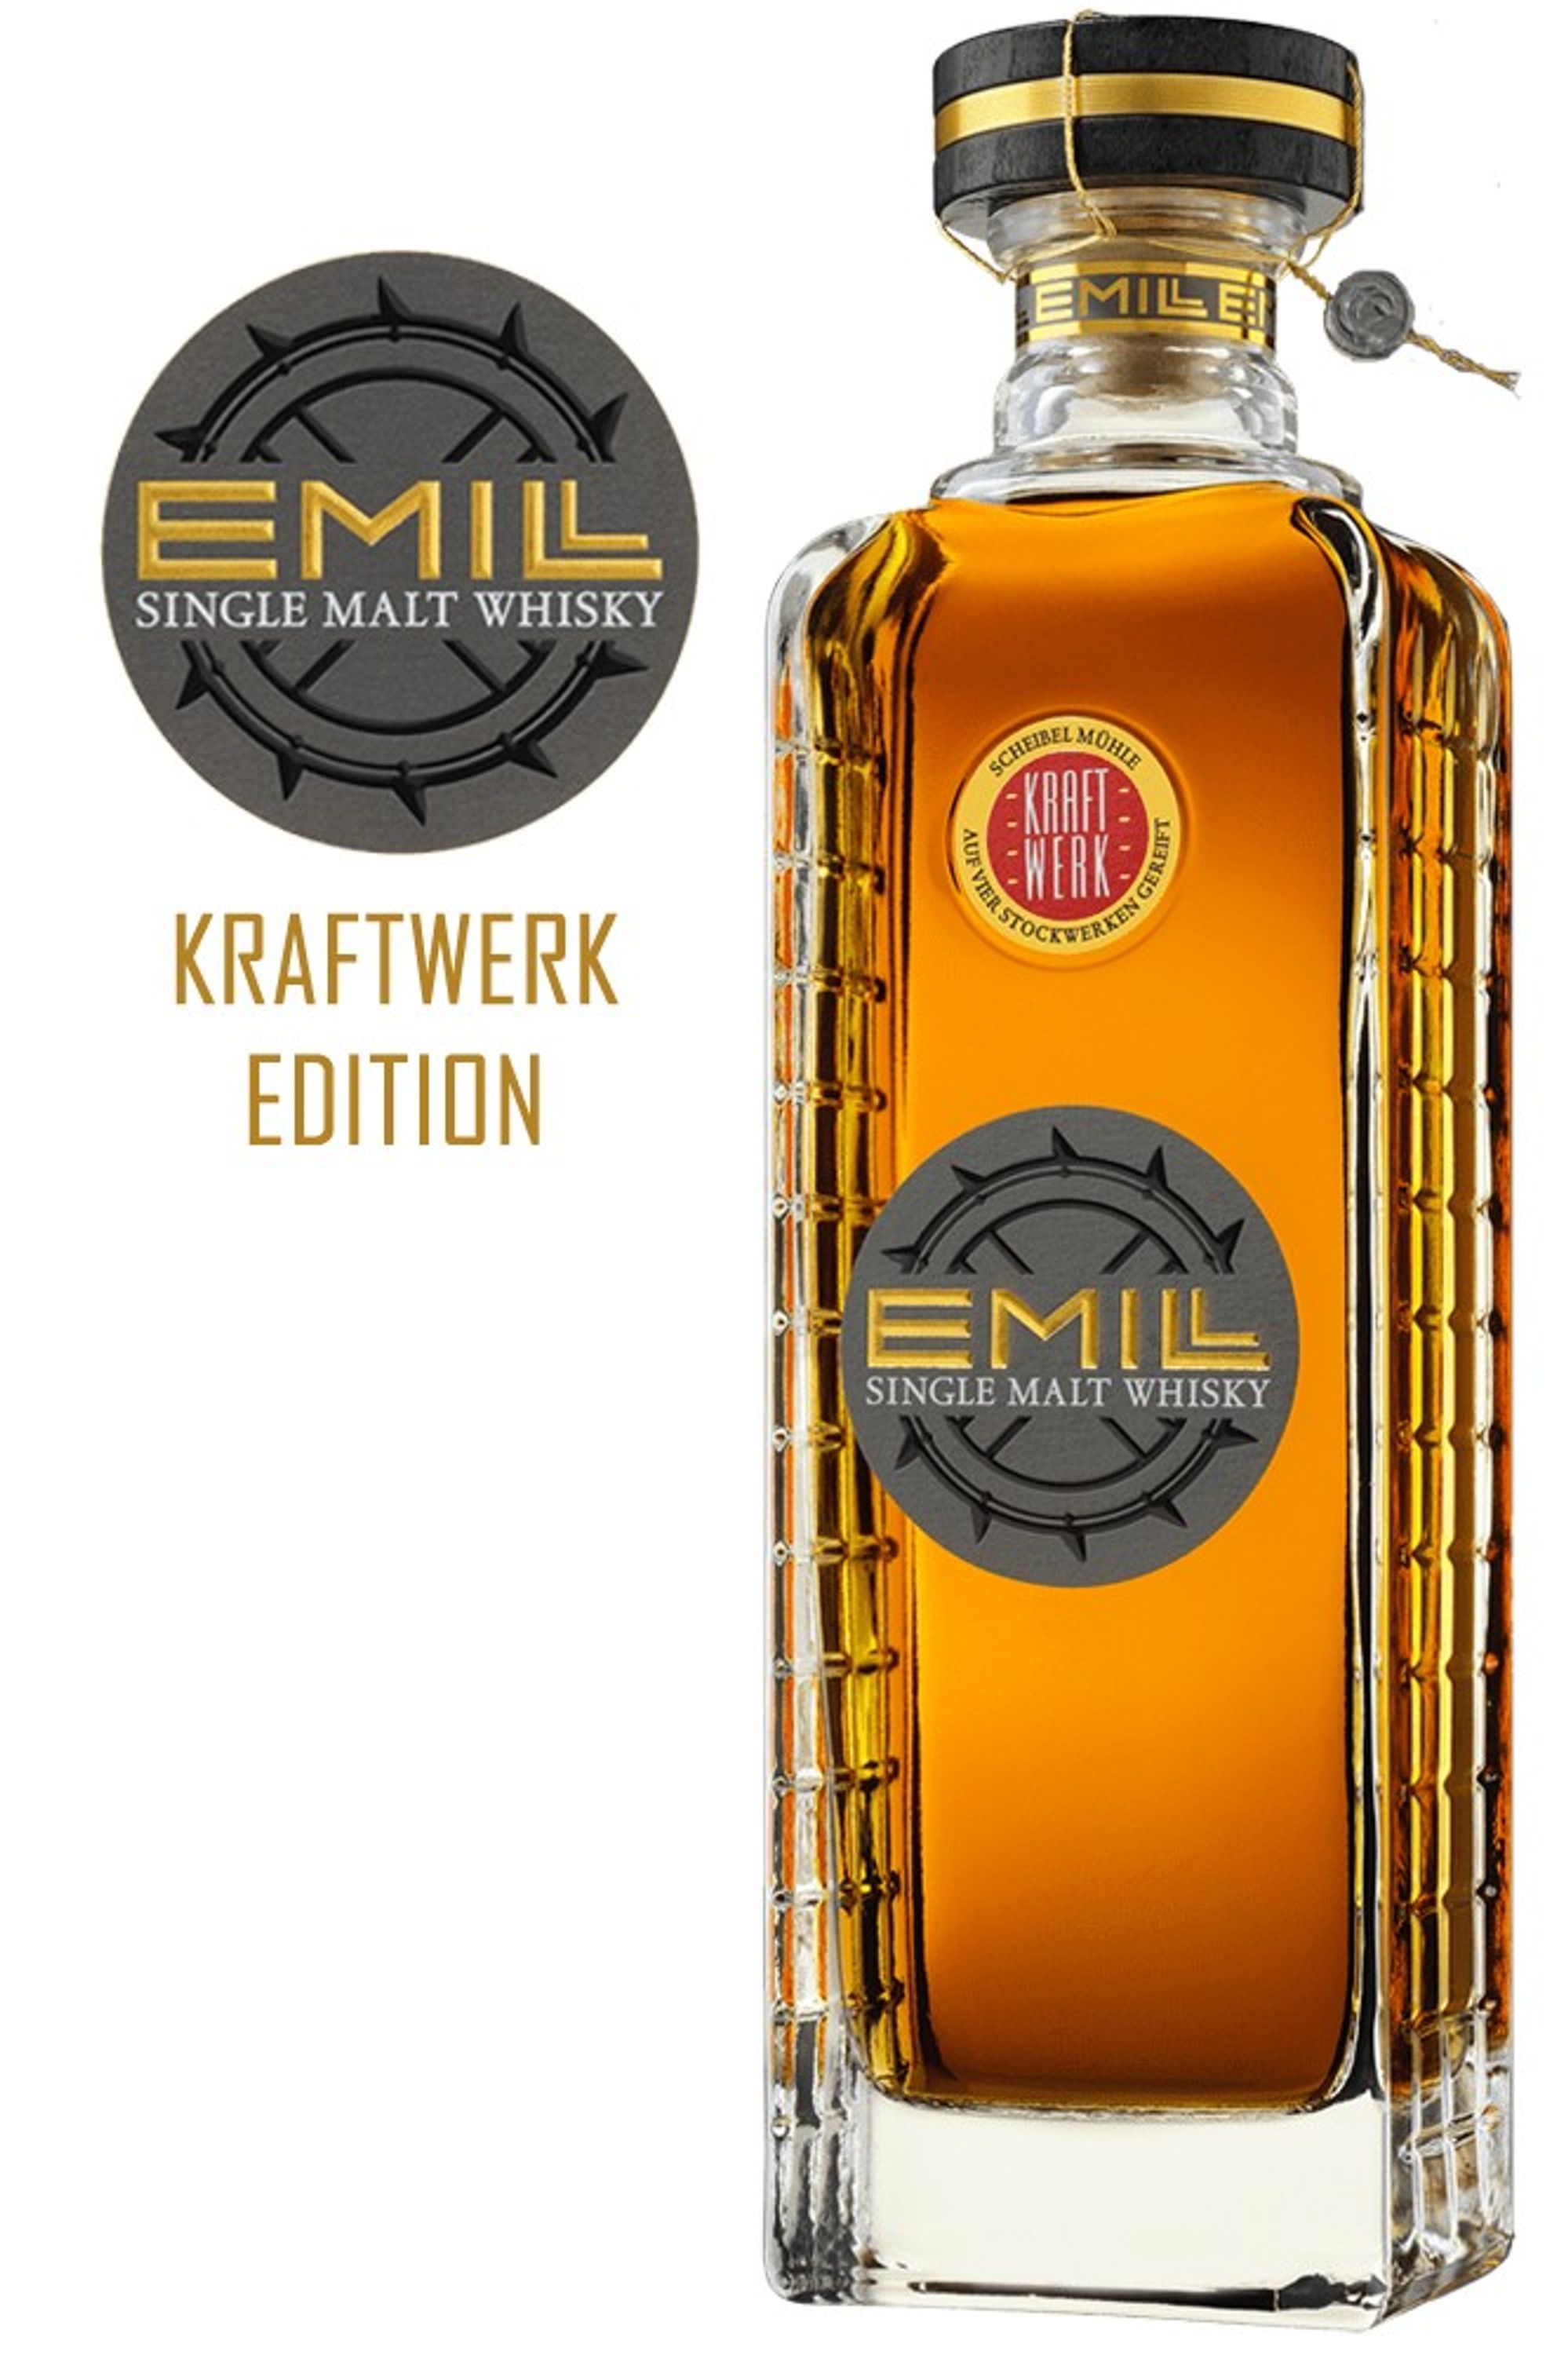 Scheibel Emill Kraftwerk Single Malt Whiskey 0.7l, alc. 58.7% by volume